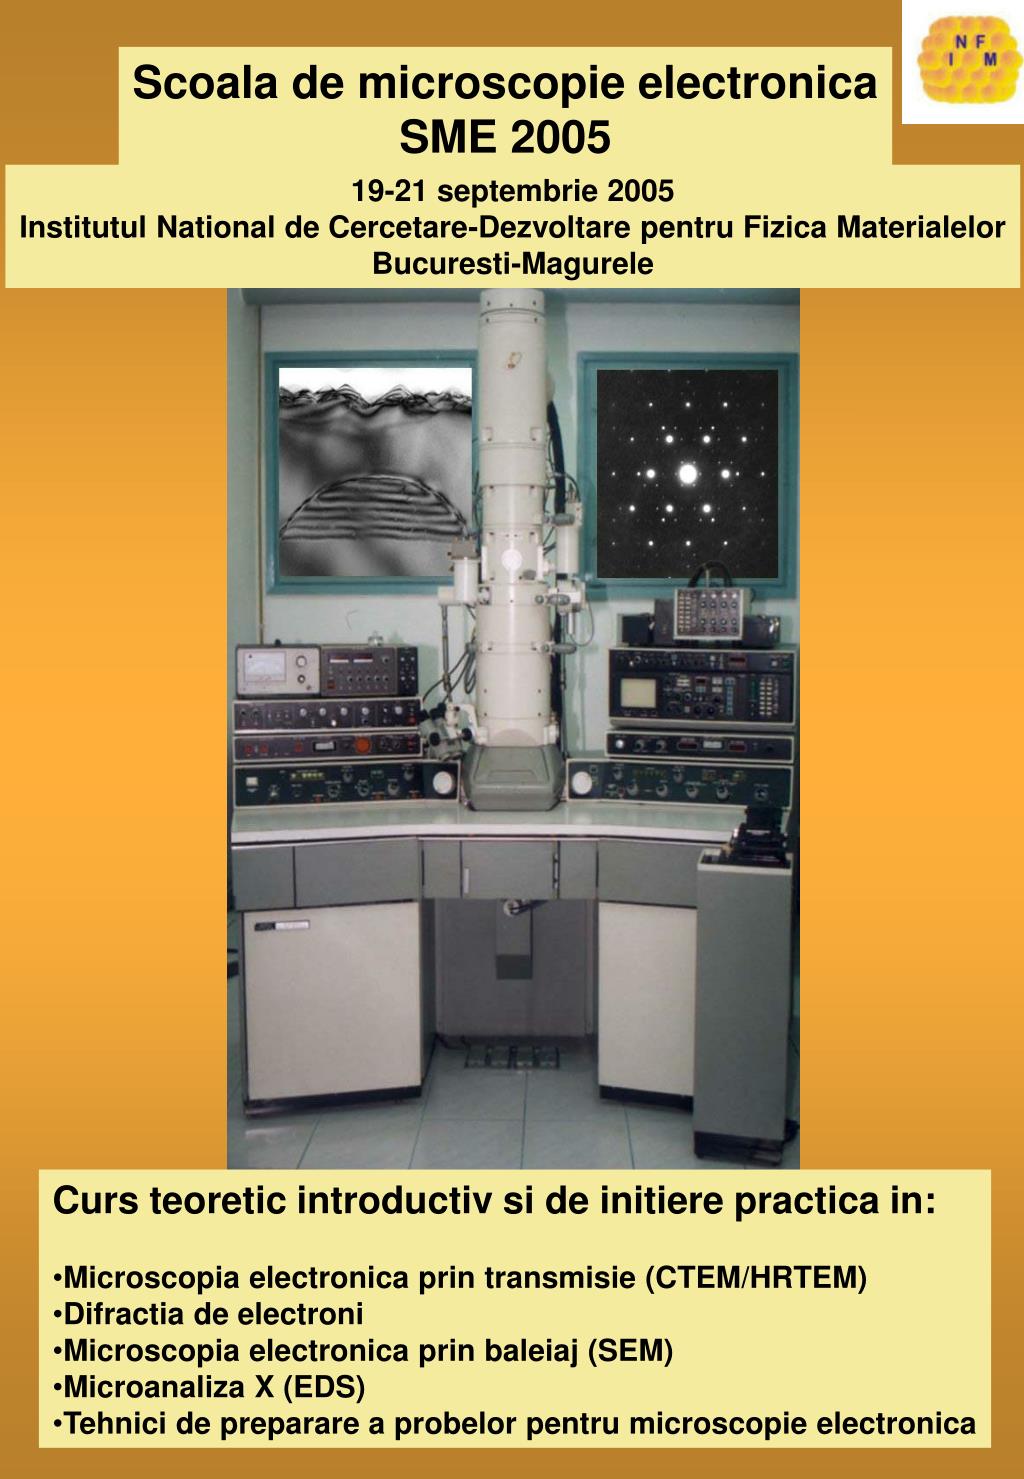 tuition fee freezer Bend PPT - Scoala de microscopie electronica SME 2005 PowerPoint Presentation -  ID:4008673